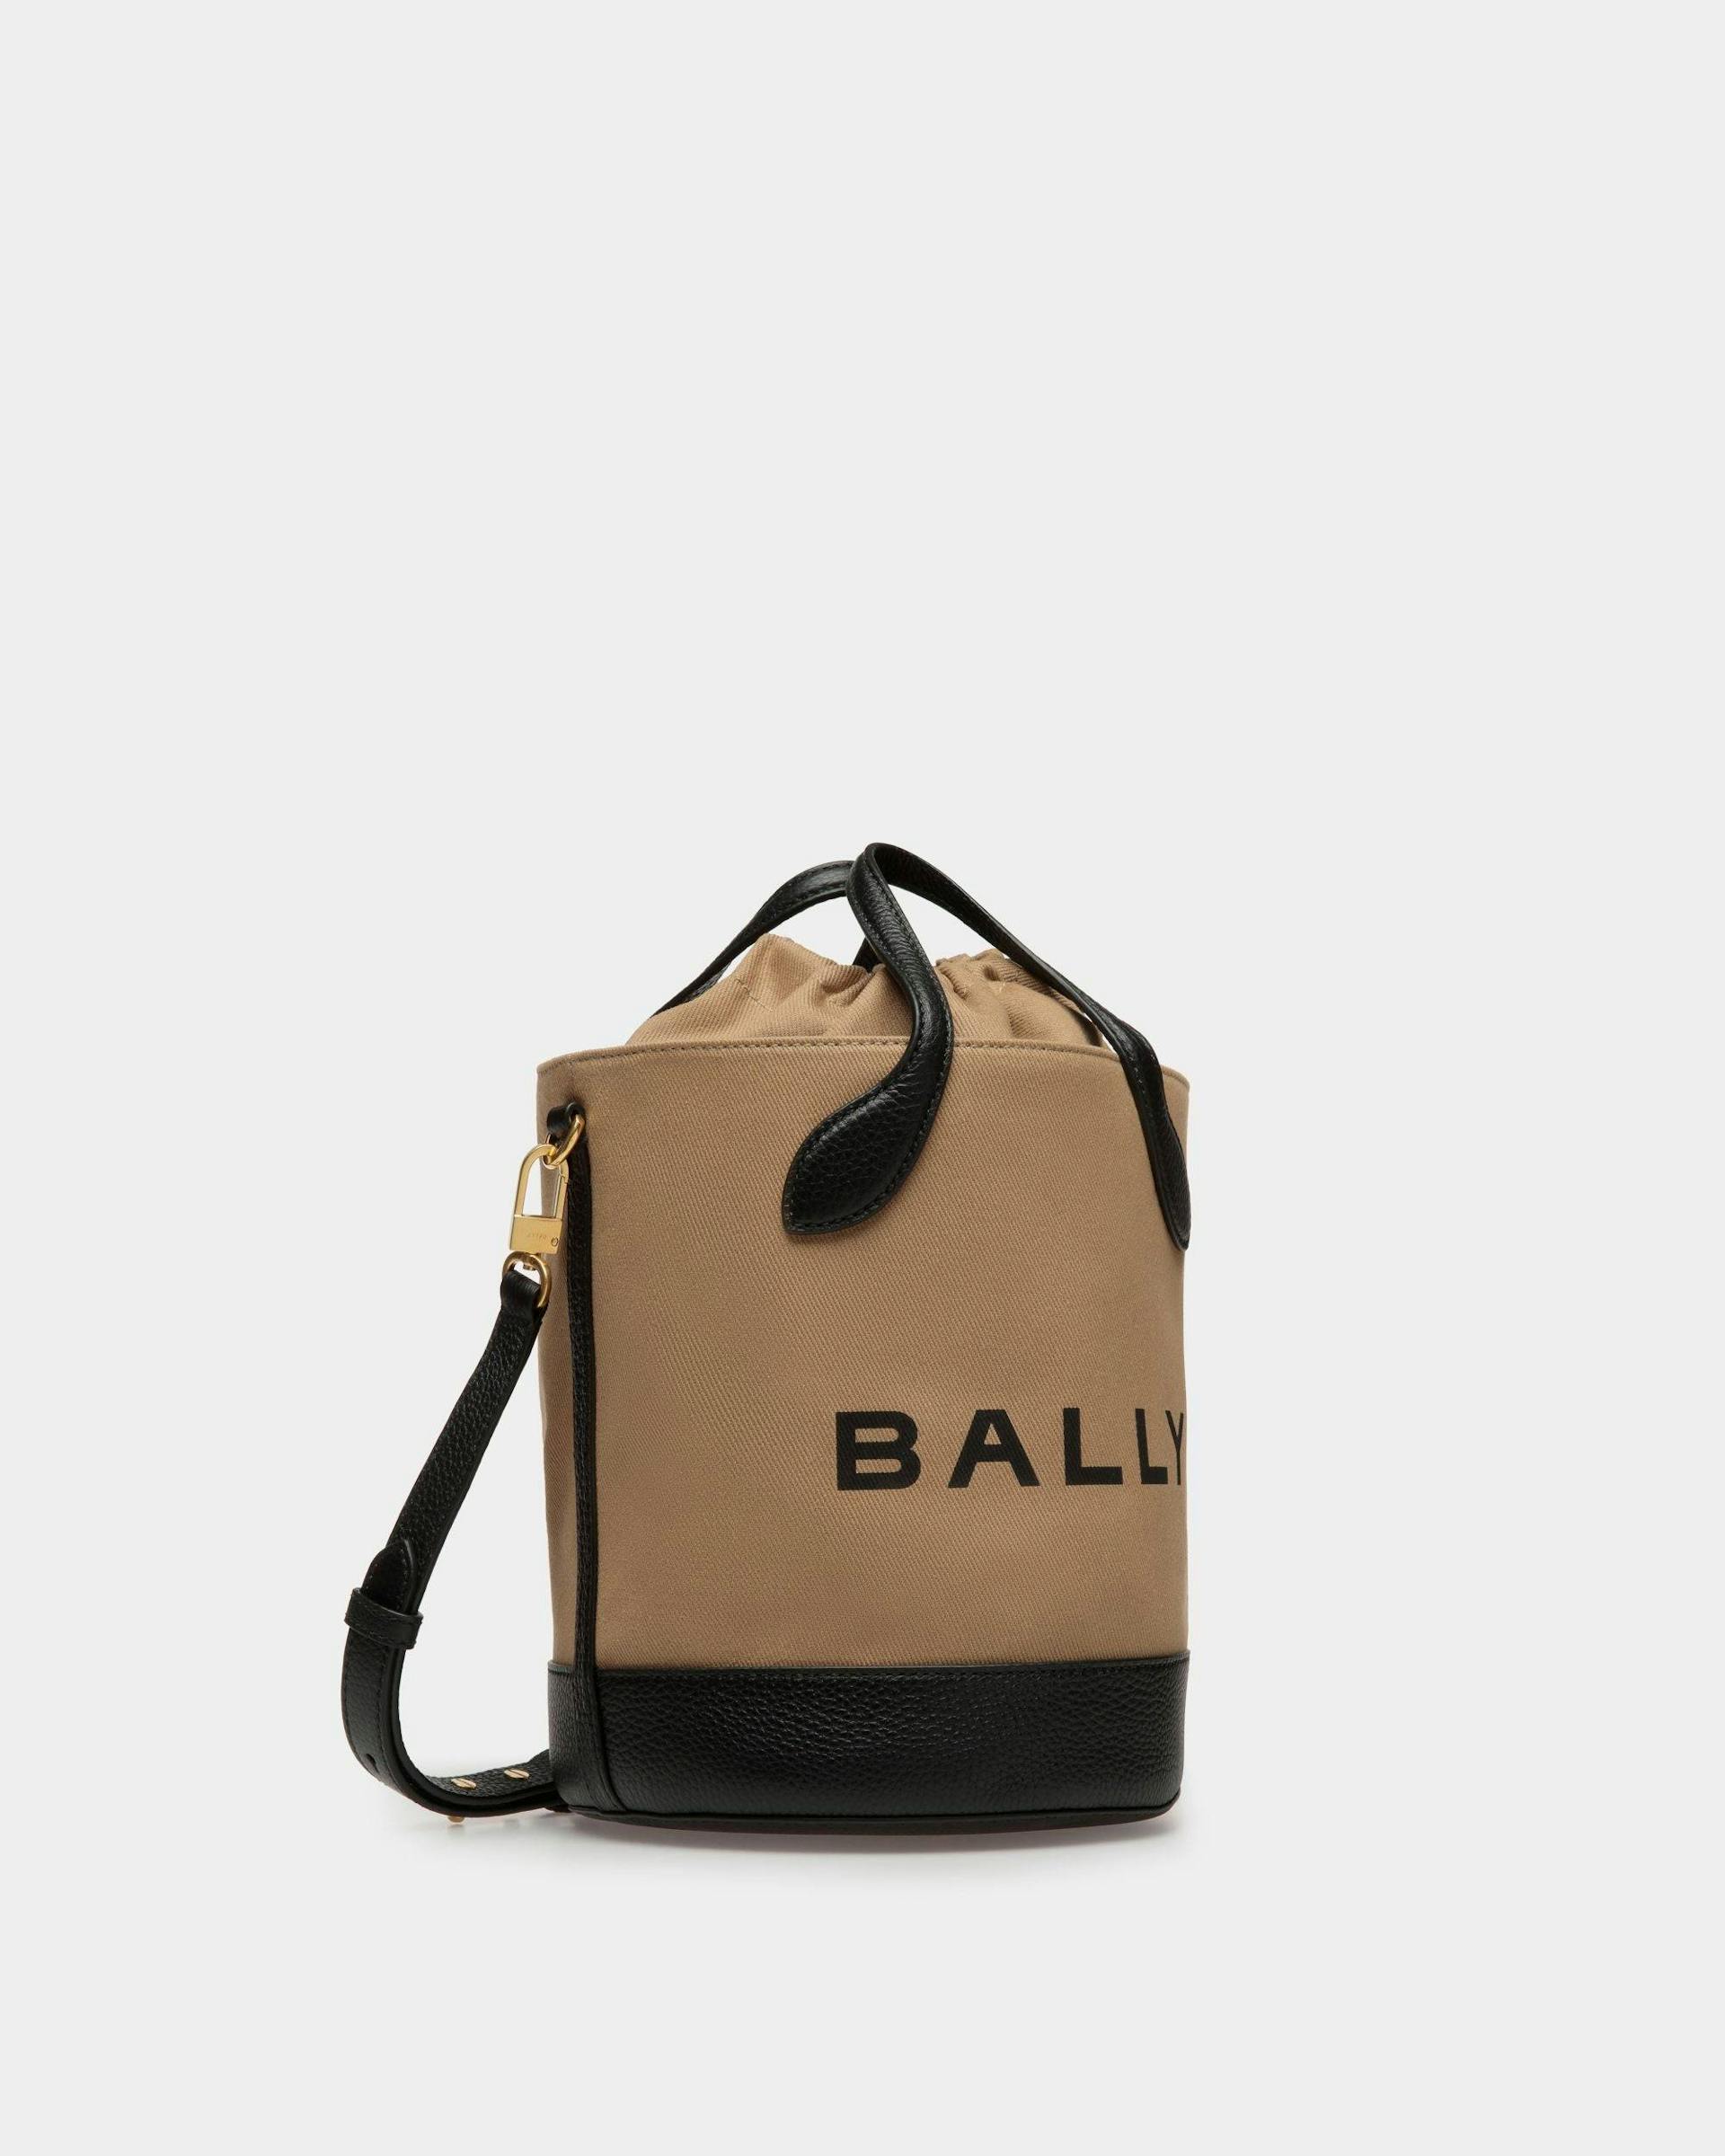 Bar Bucket Bag In Sand And Black Fabric - Women's - Bally - 03